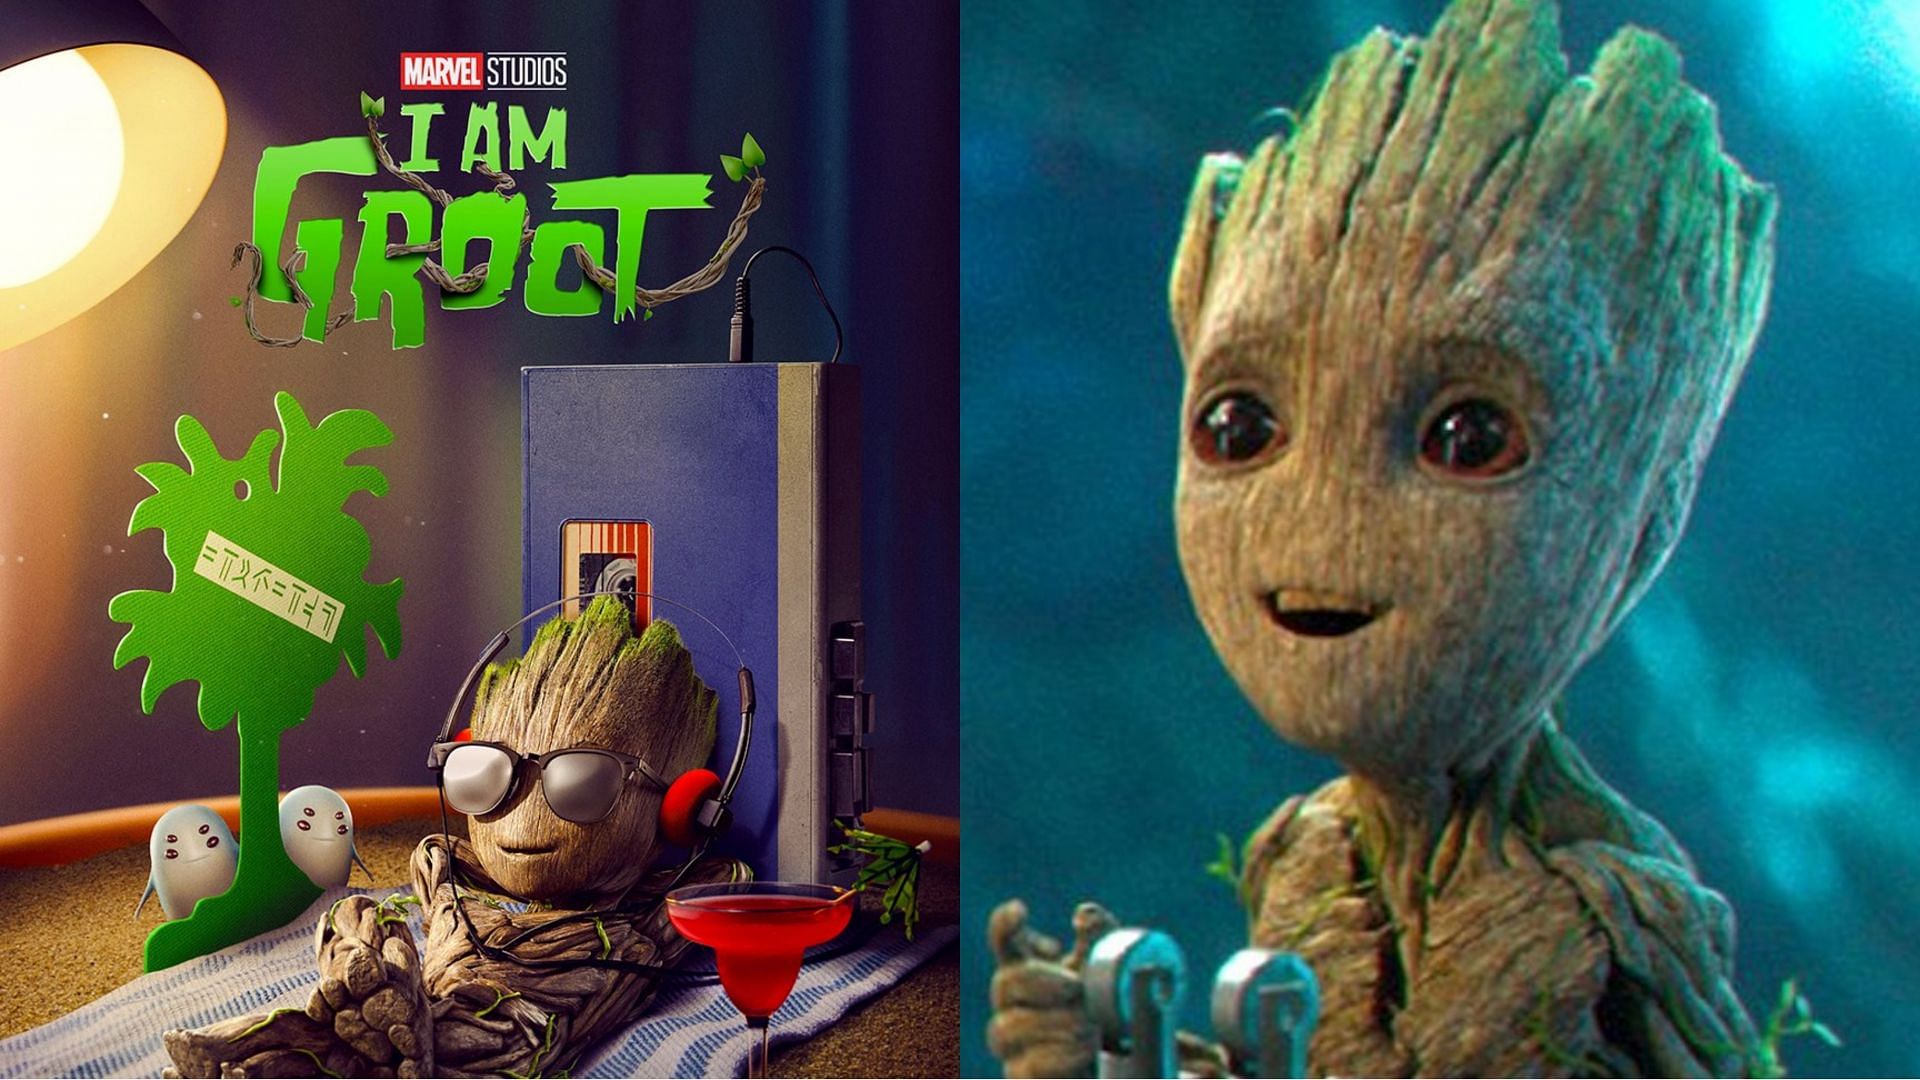 Baby Groot (Images via Marvel Studios)